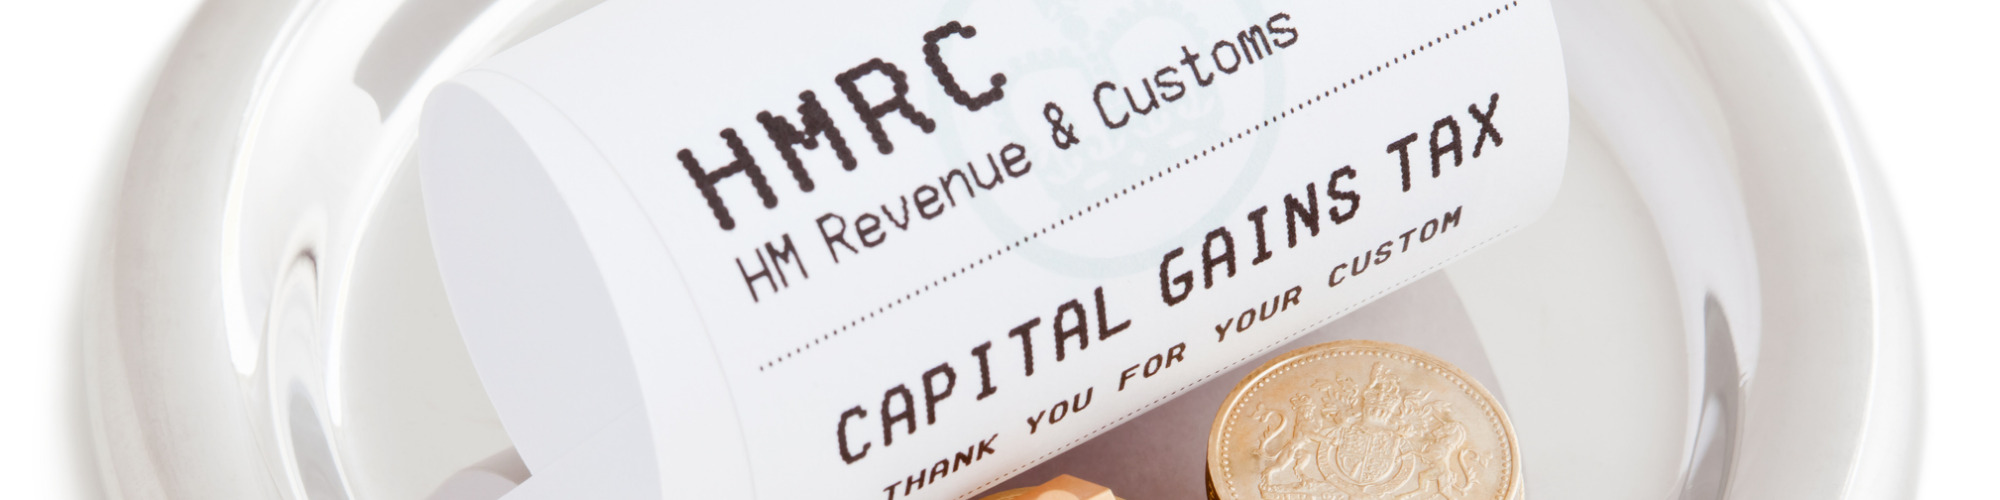 Capital Gains Tax for Accountants - An Advanced Guide